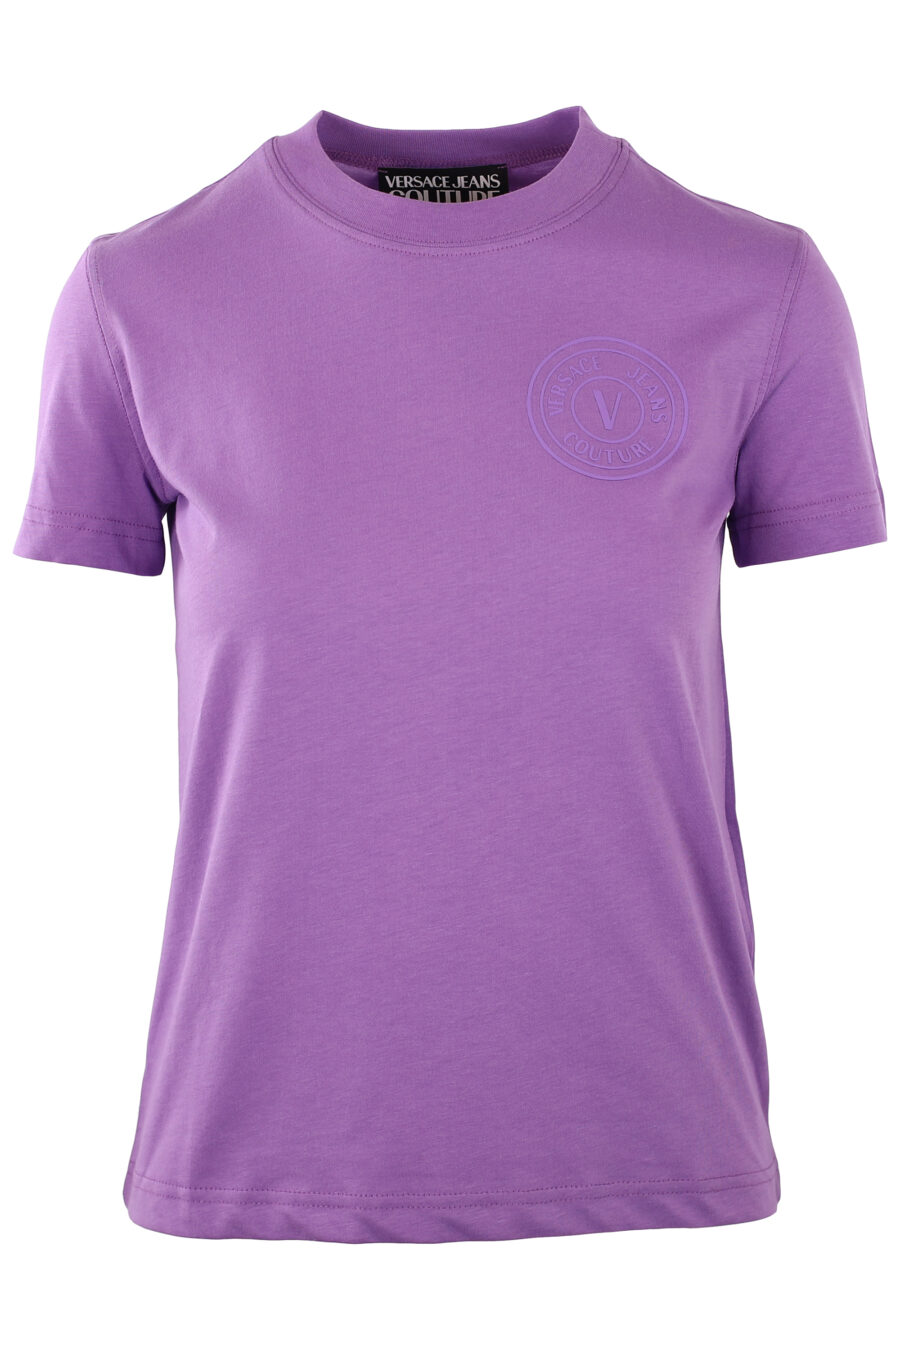 Purple T-shirt with monochrome round logo - IMG 0234